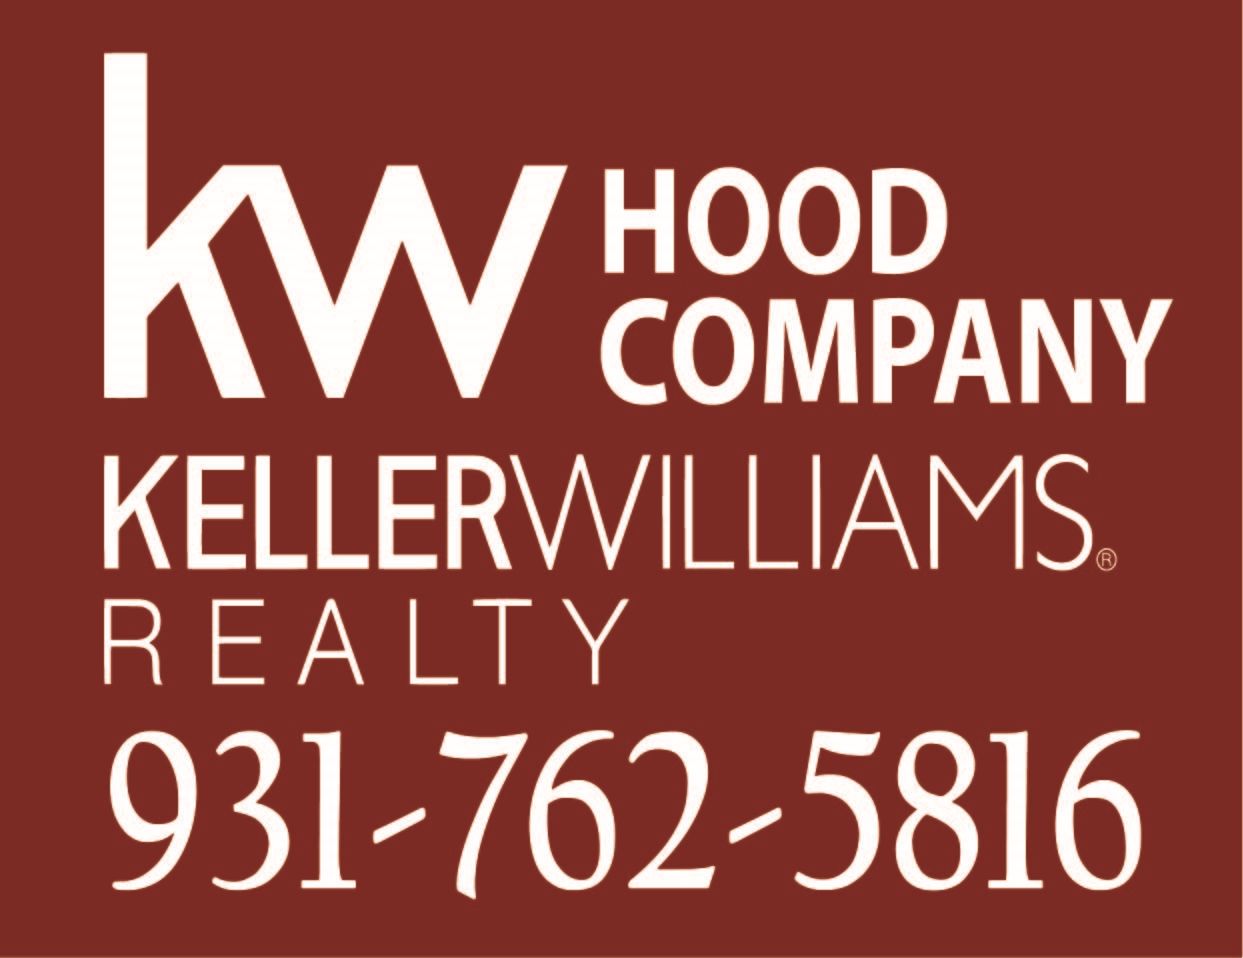 Keller Williams Hood Company Photo